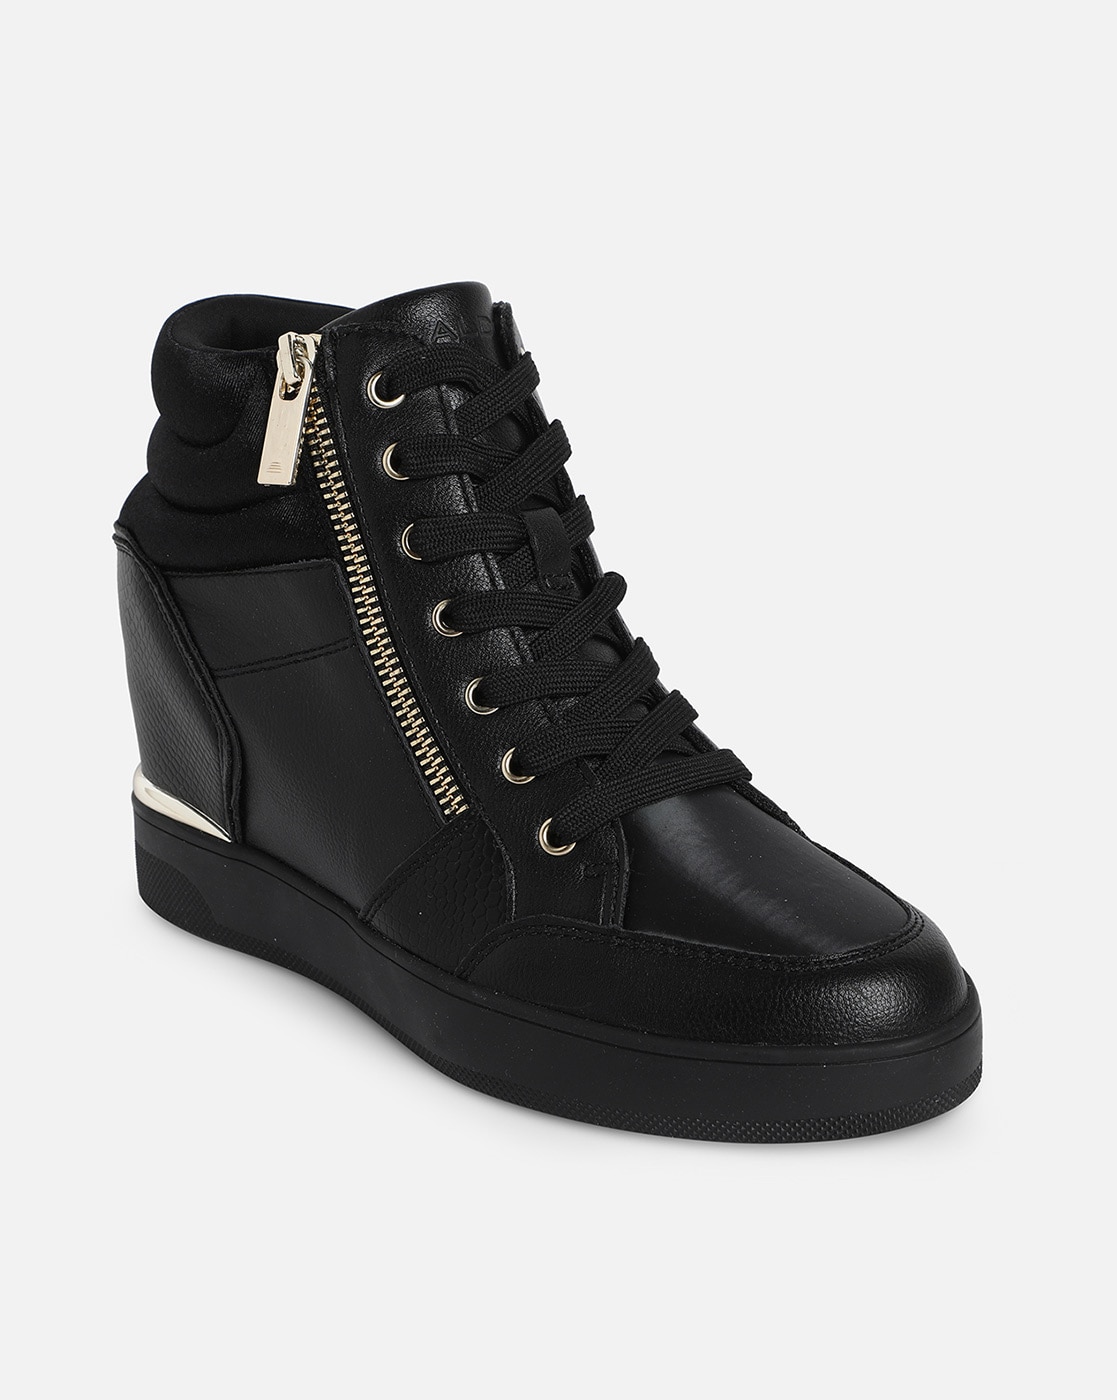 Aldo Pink & White High Top Side Zip Fashion Sneakers Women's Size 9 | eBay